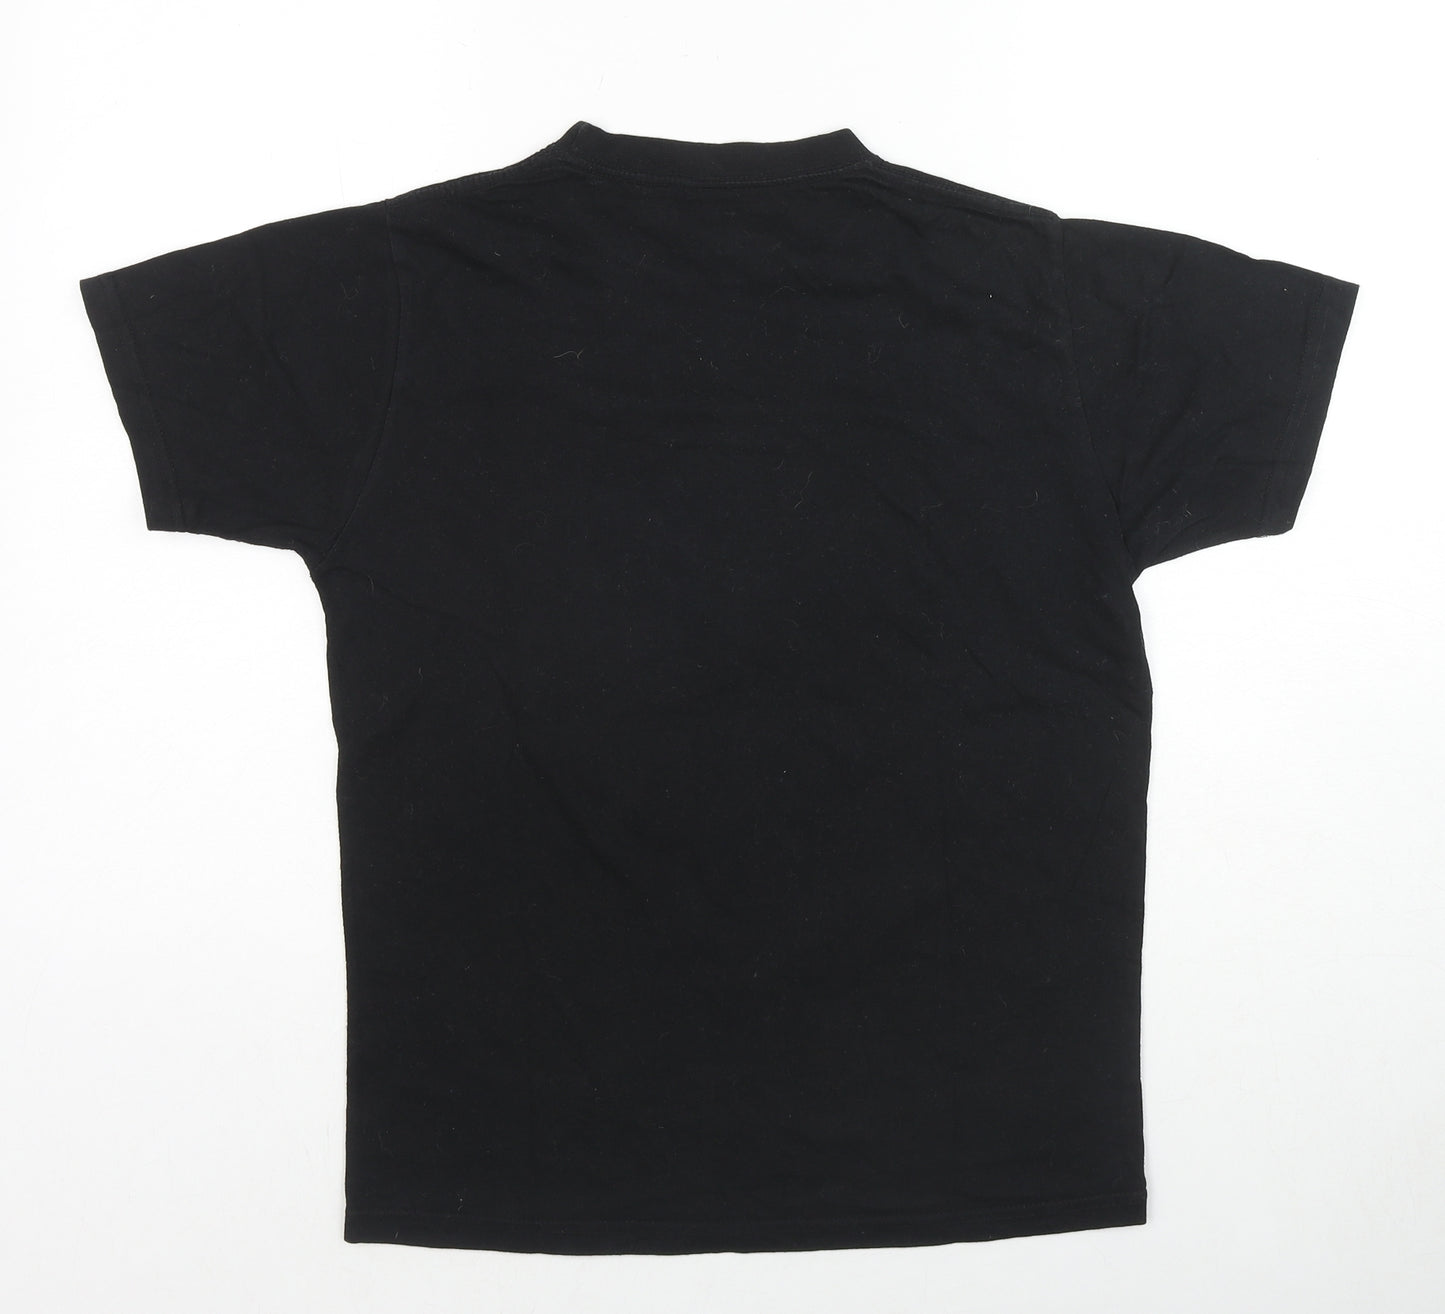 Stranger Things Womens Black Cotton Basic T-Shirt Size S Round Neck - Stranger Things